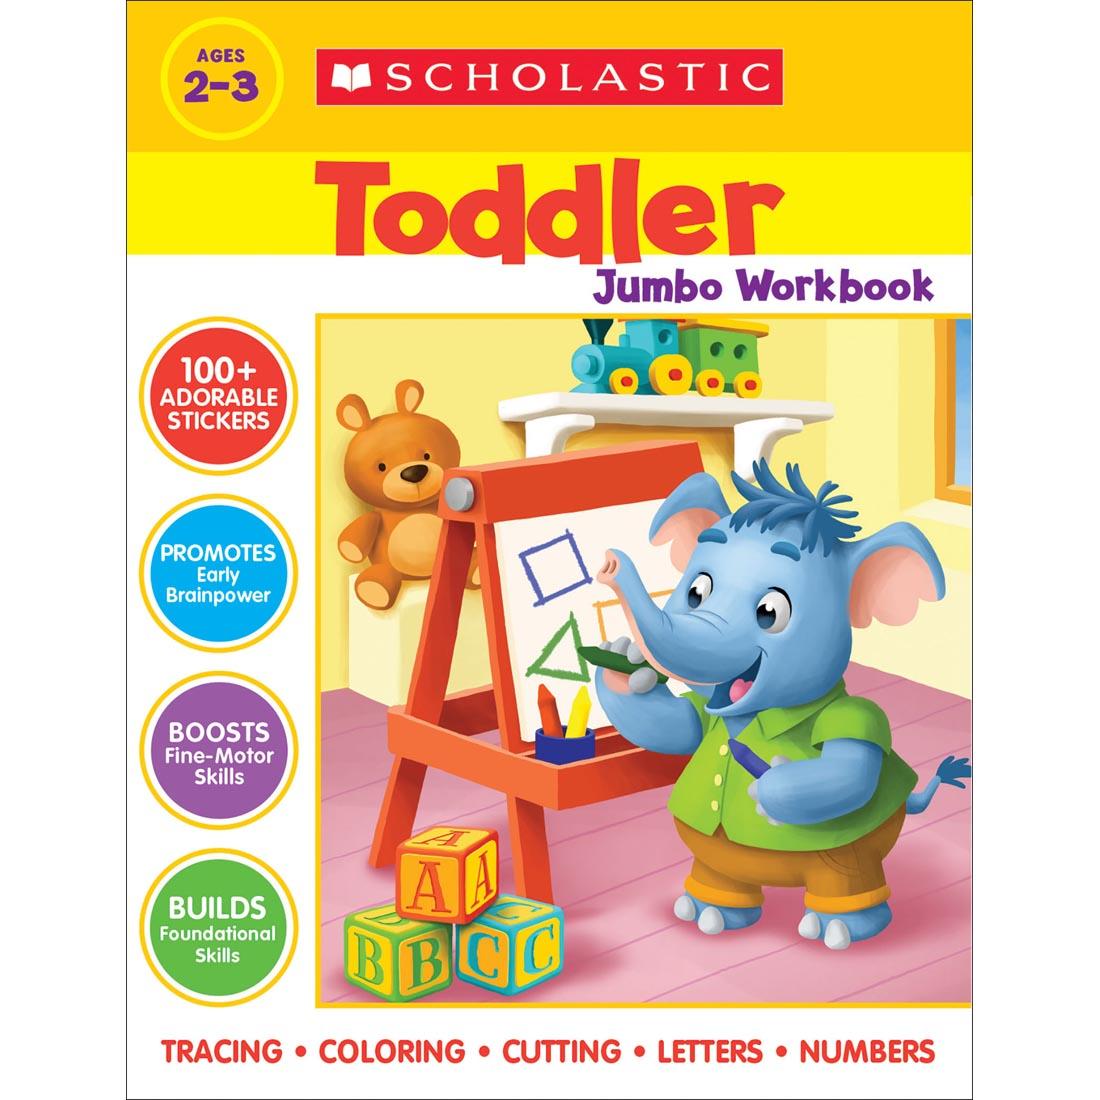 Toddler Jumbo Workbook by Scholastic